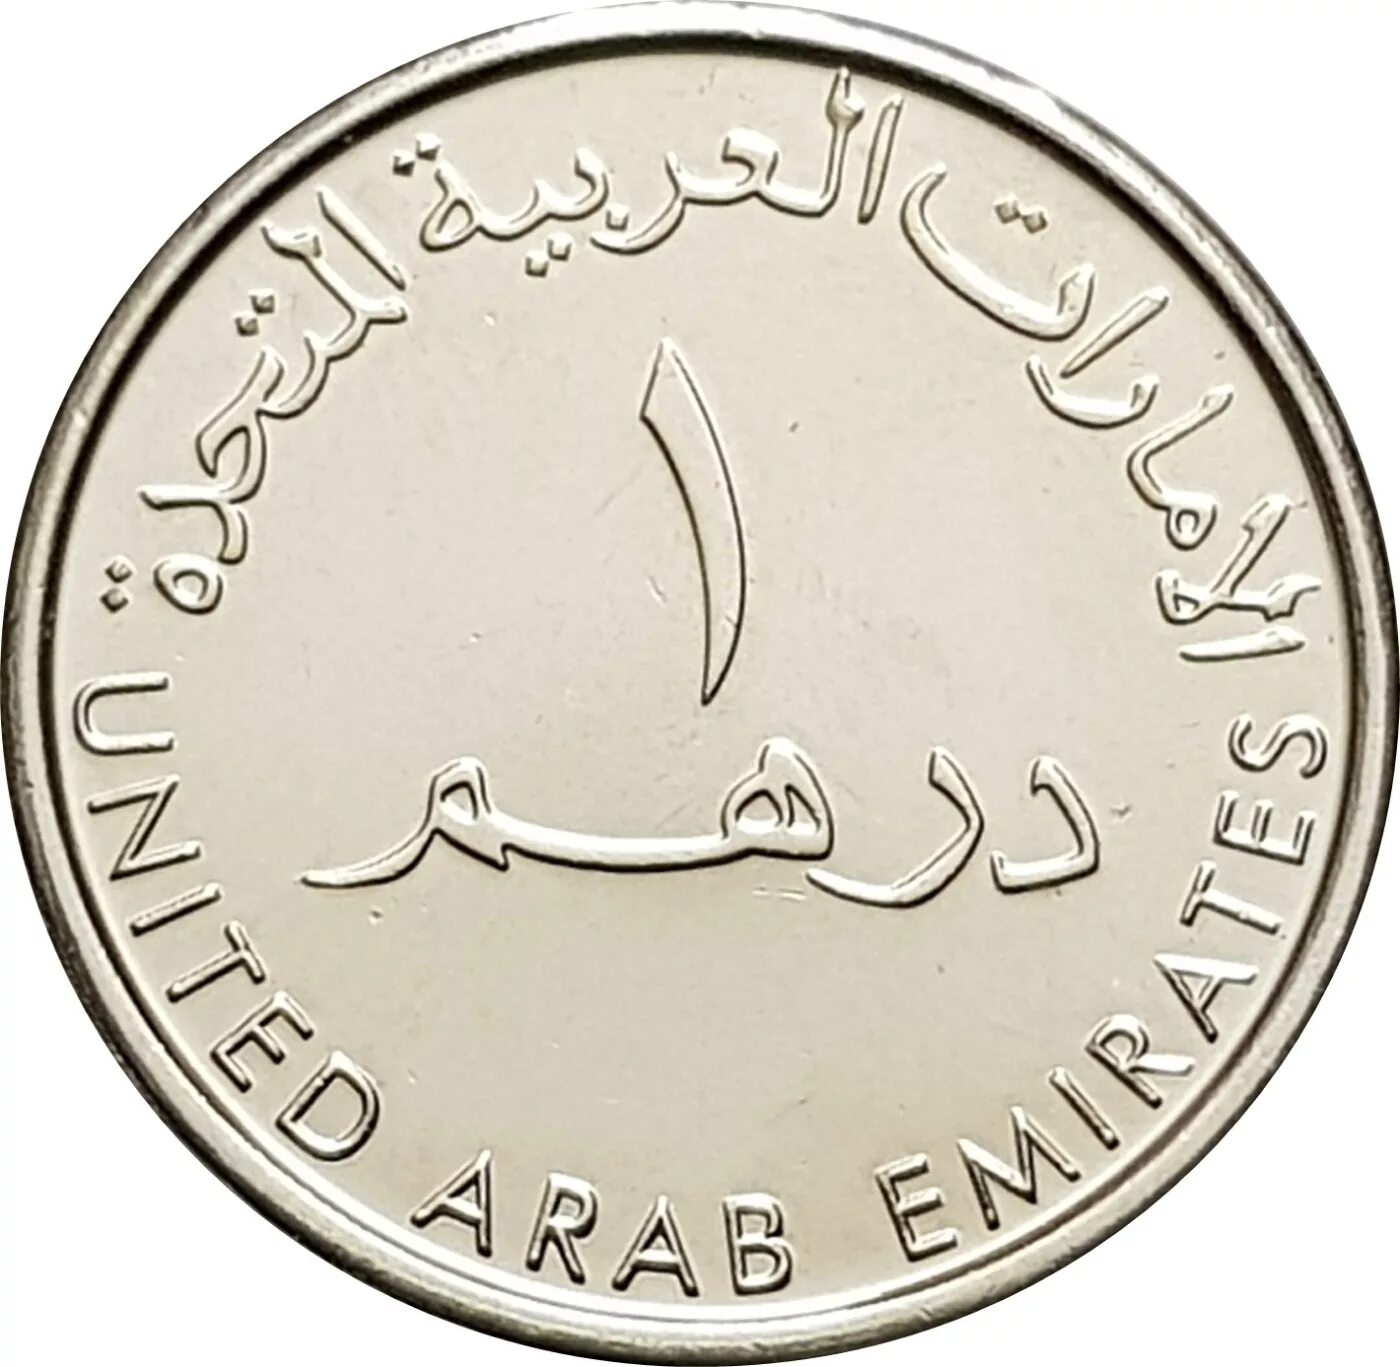 3500 дирхам. Монета 1 дирхам (ОАЭ) арабские эмираты.. Монета арабская United arab Emirates. Монеты ОАЭ 1 дирхам. Монеты Дубая 1 дирхам.